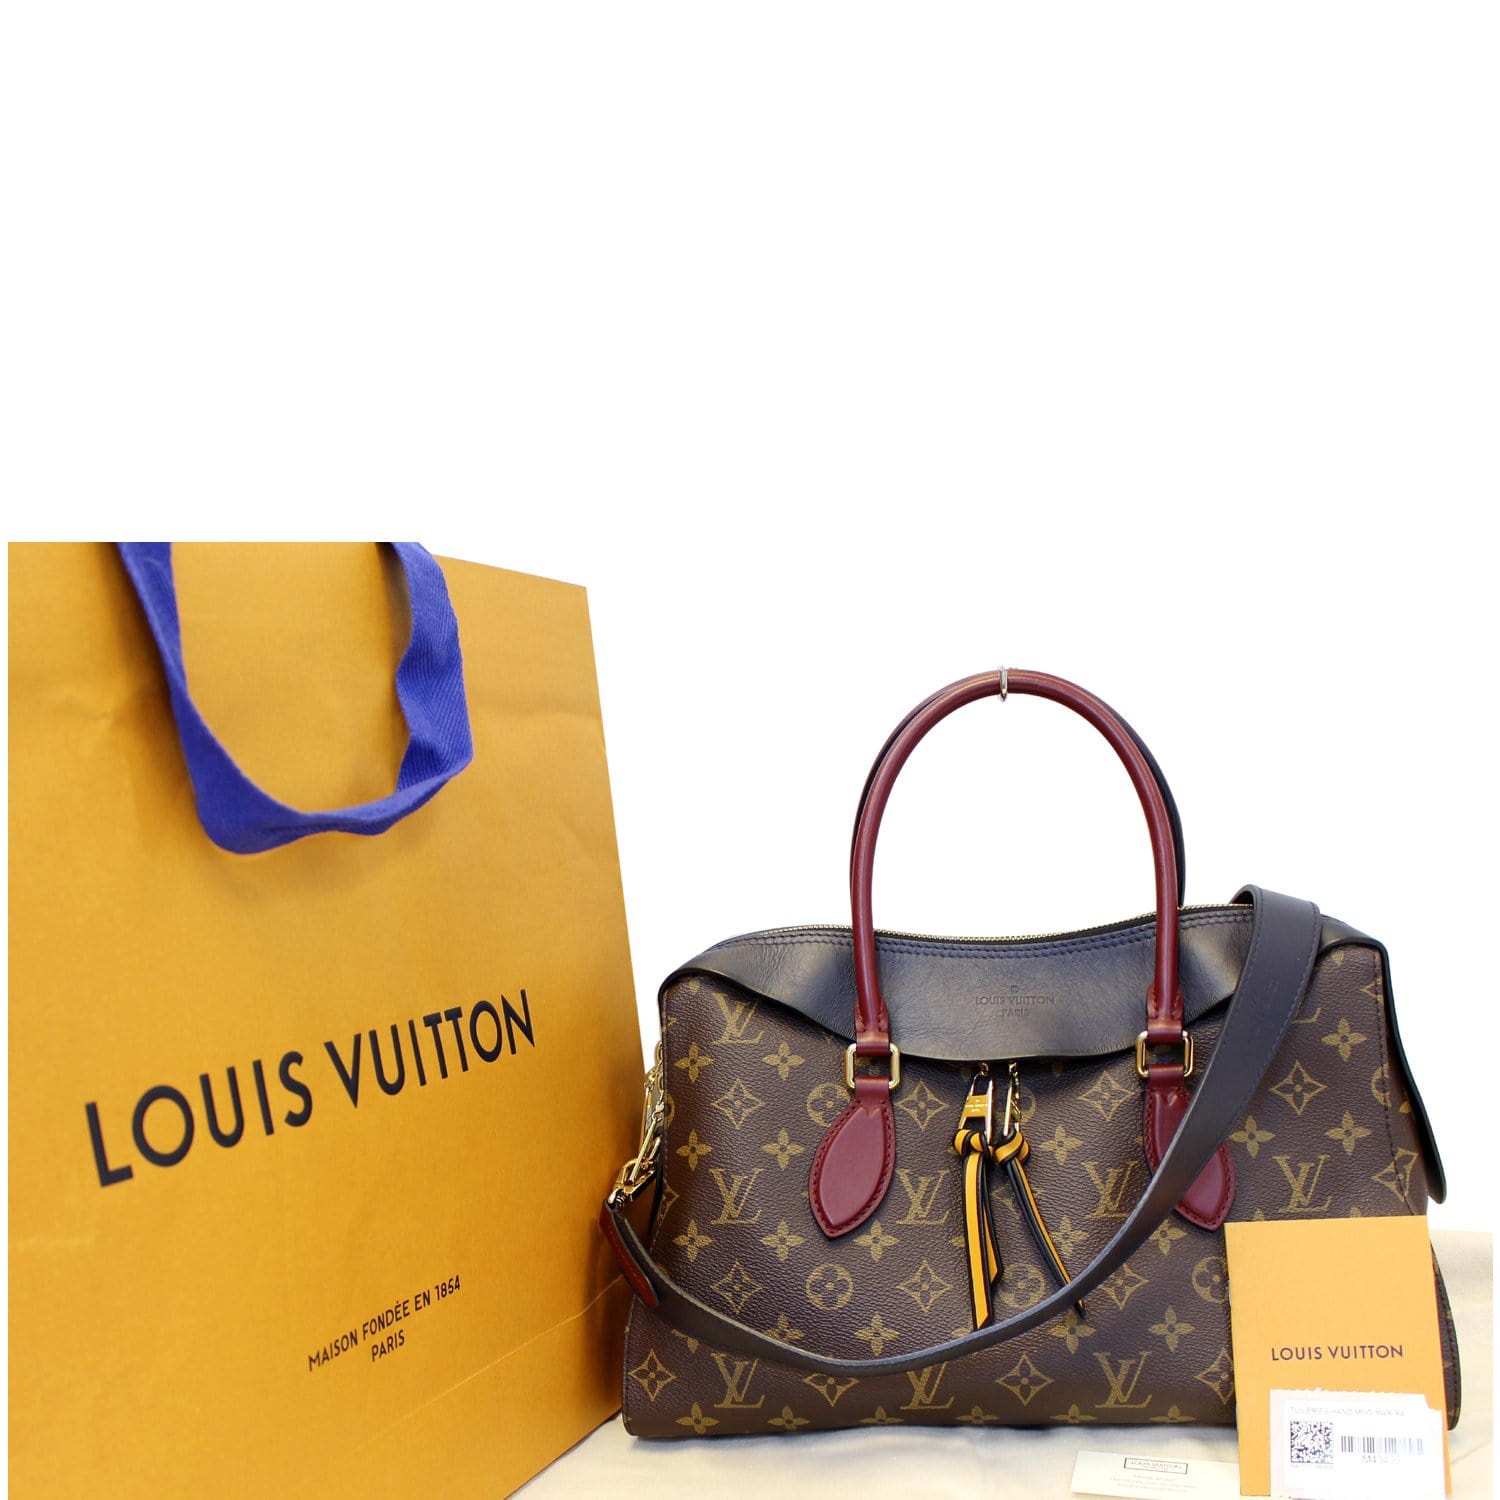 LOUIS VUITTON Authentic Paper Gift Shopping Bag Orange 11 X 8 X 2.25”